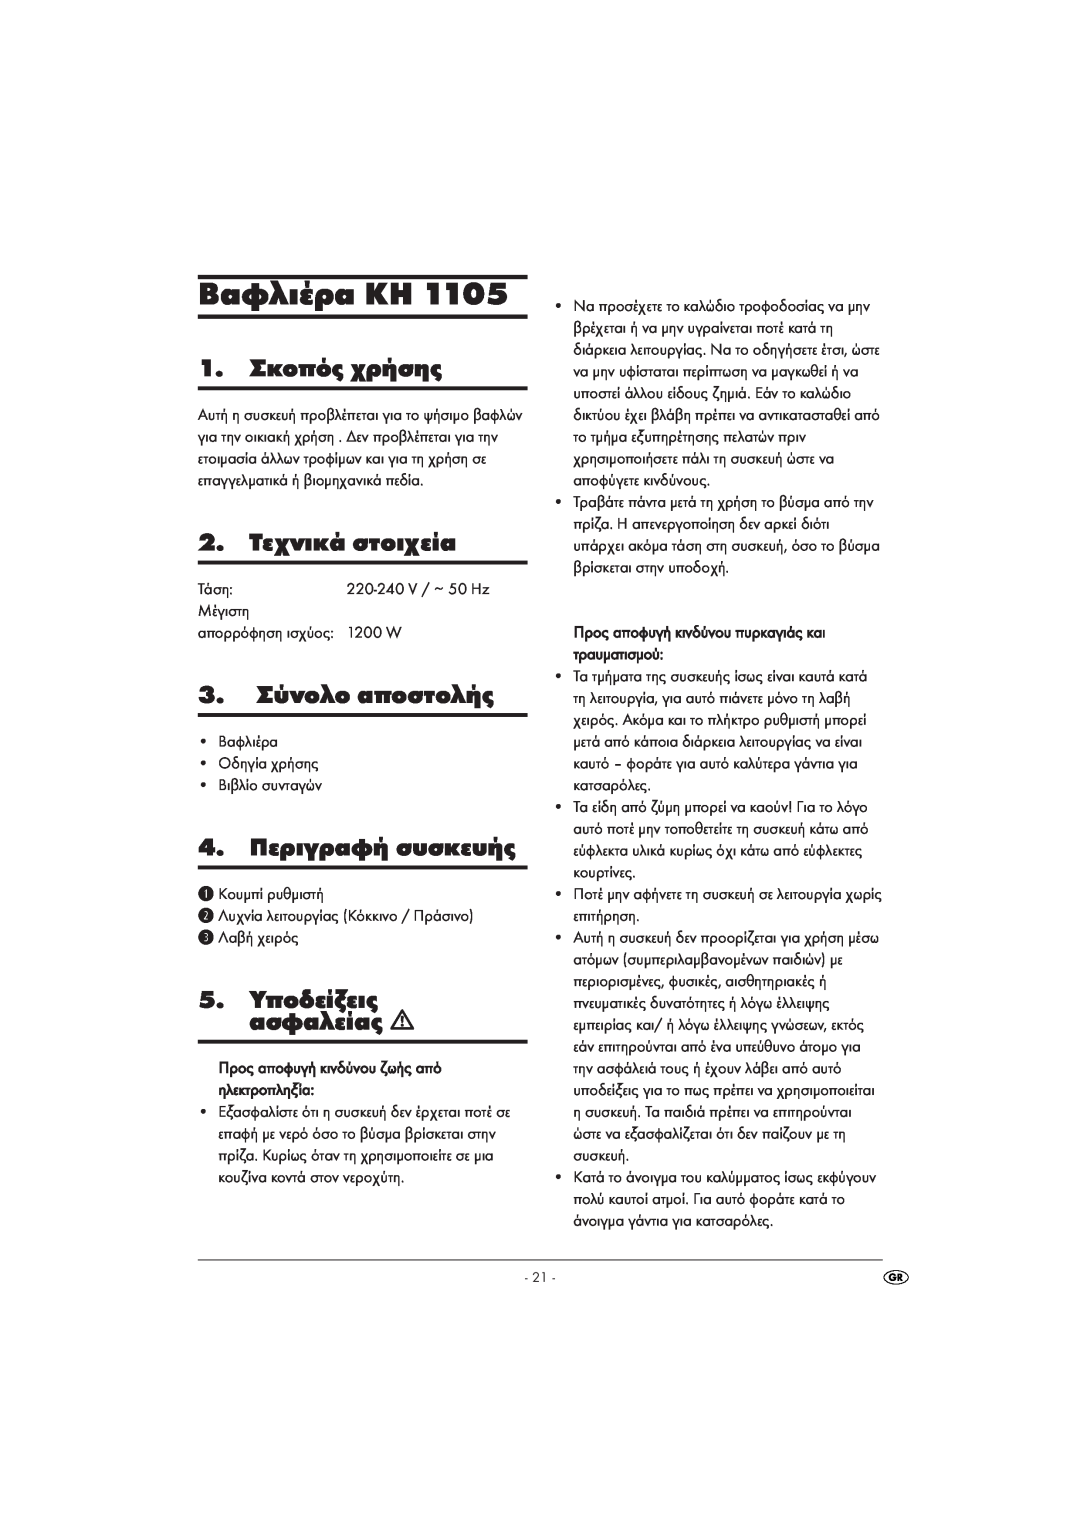 Kompernass KH 1105 manual Βαφλιέρα KH, 1.Σκοπός χρήσης, 2. Τεχνικά στοιχεία, 3.Σύνολο αποστολής, 4. Περιγραφή συσκευής 